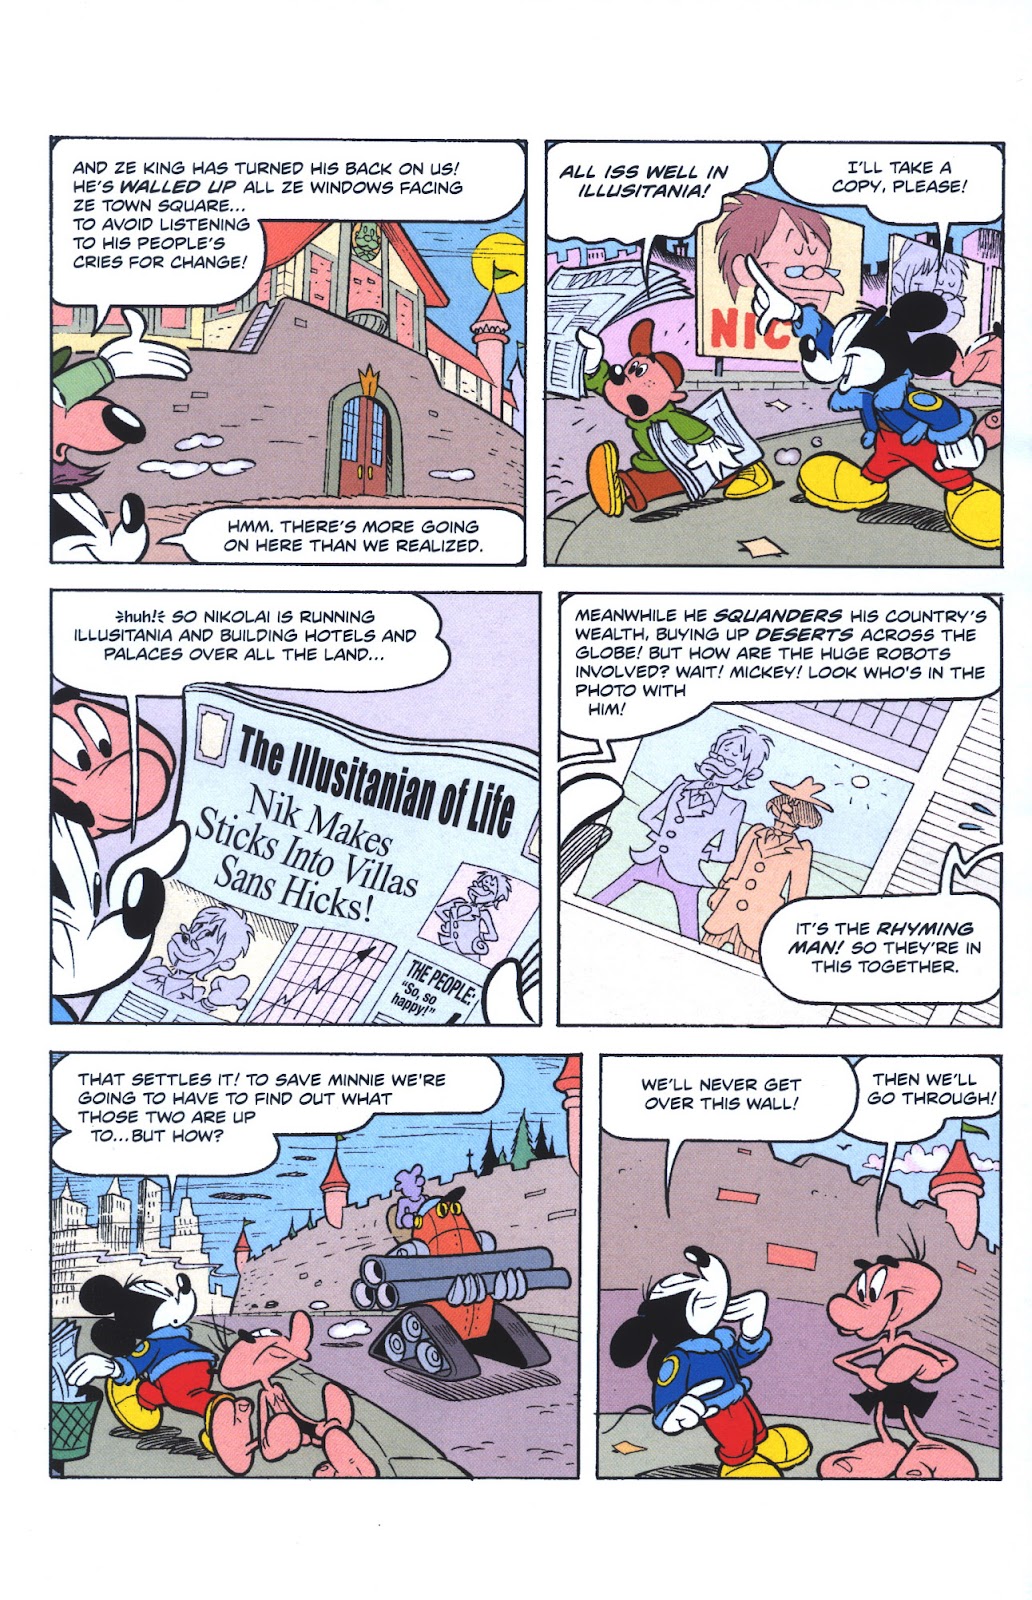 Comic Walt Disney S Comics And Stories Issue 706